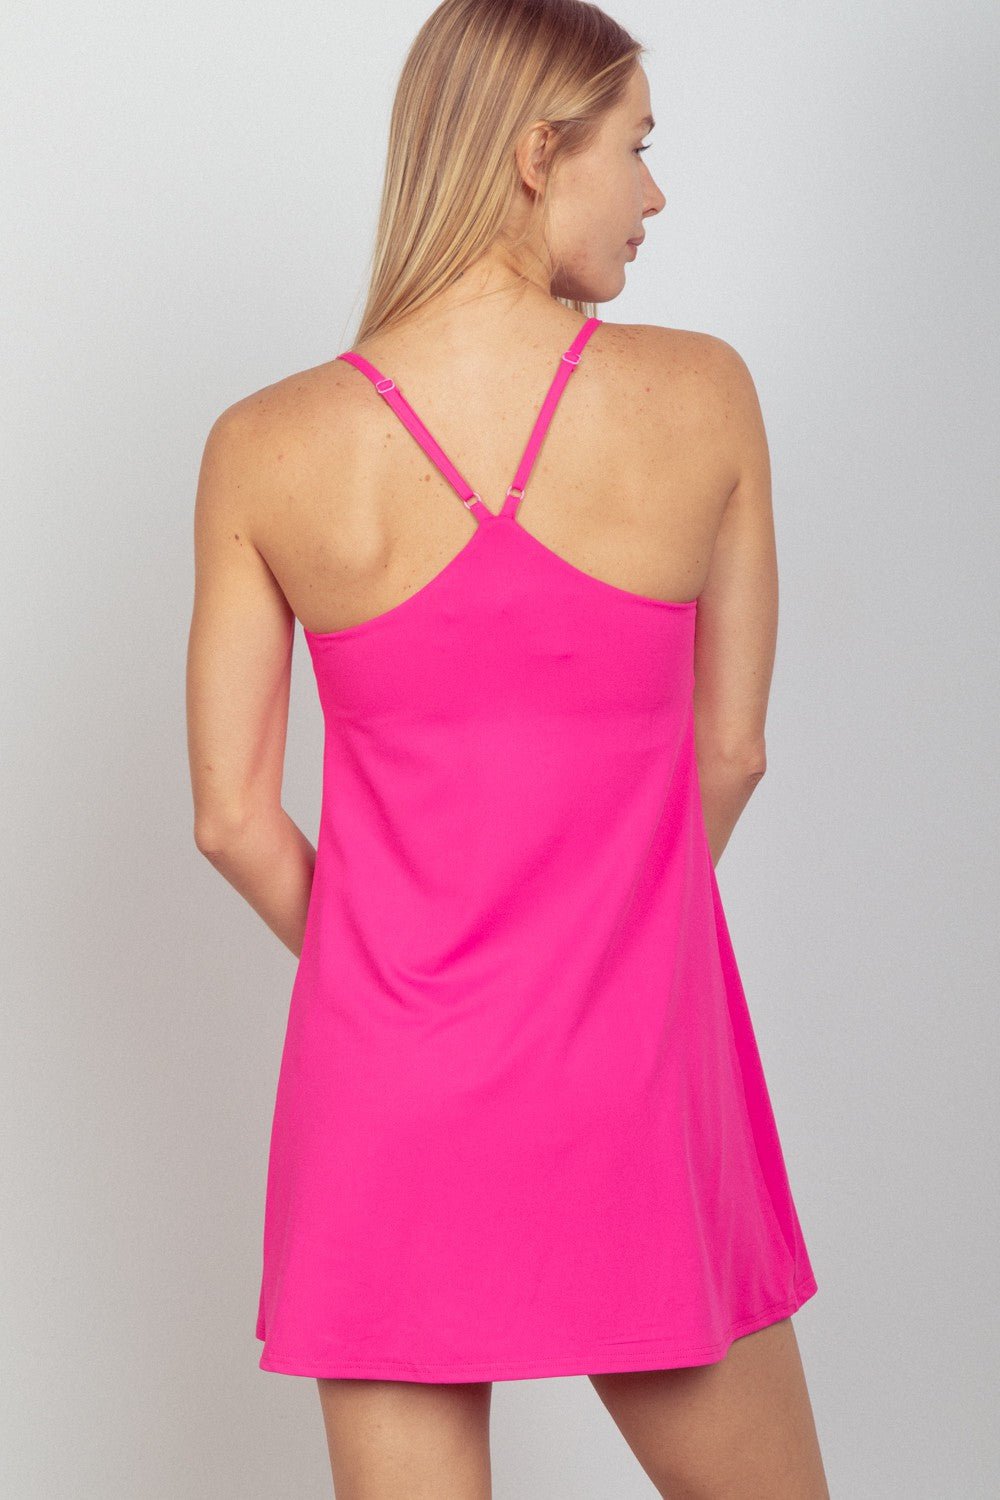 Sleeveless Active Tennis Dress in PinkDressVery J